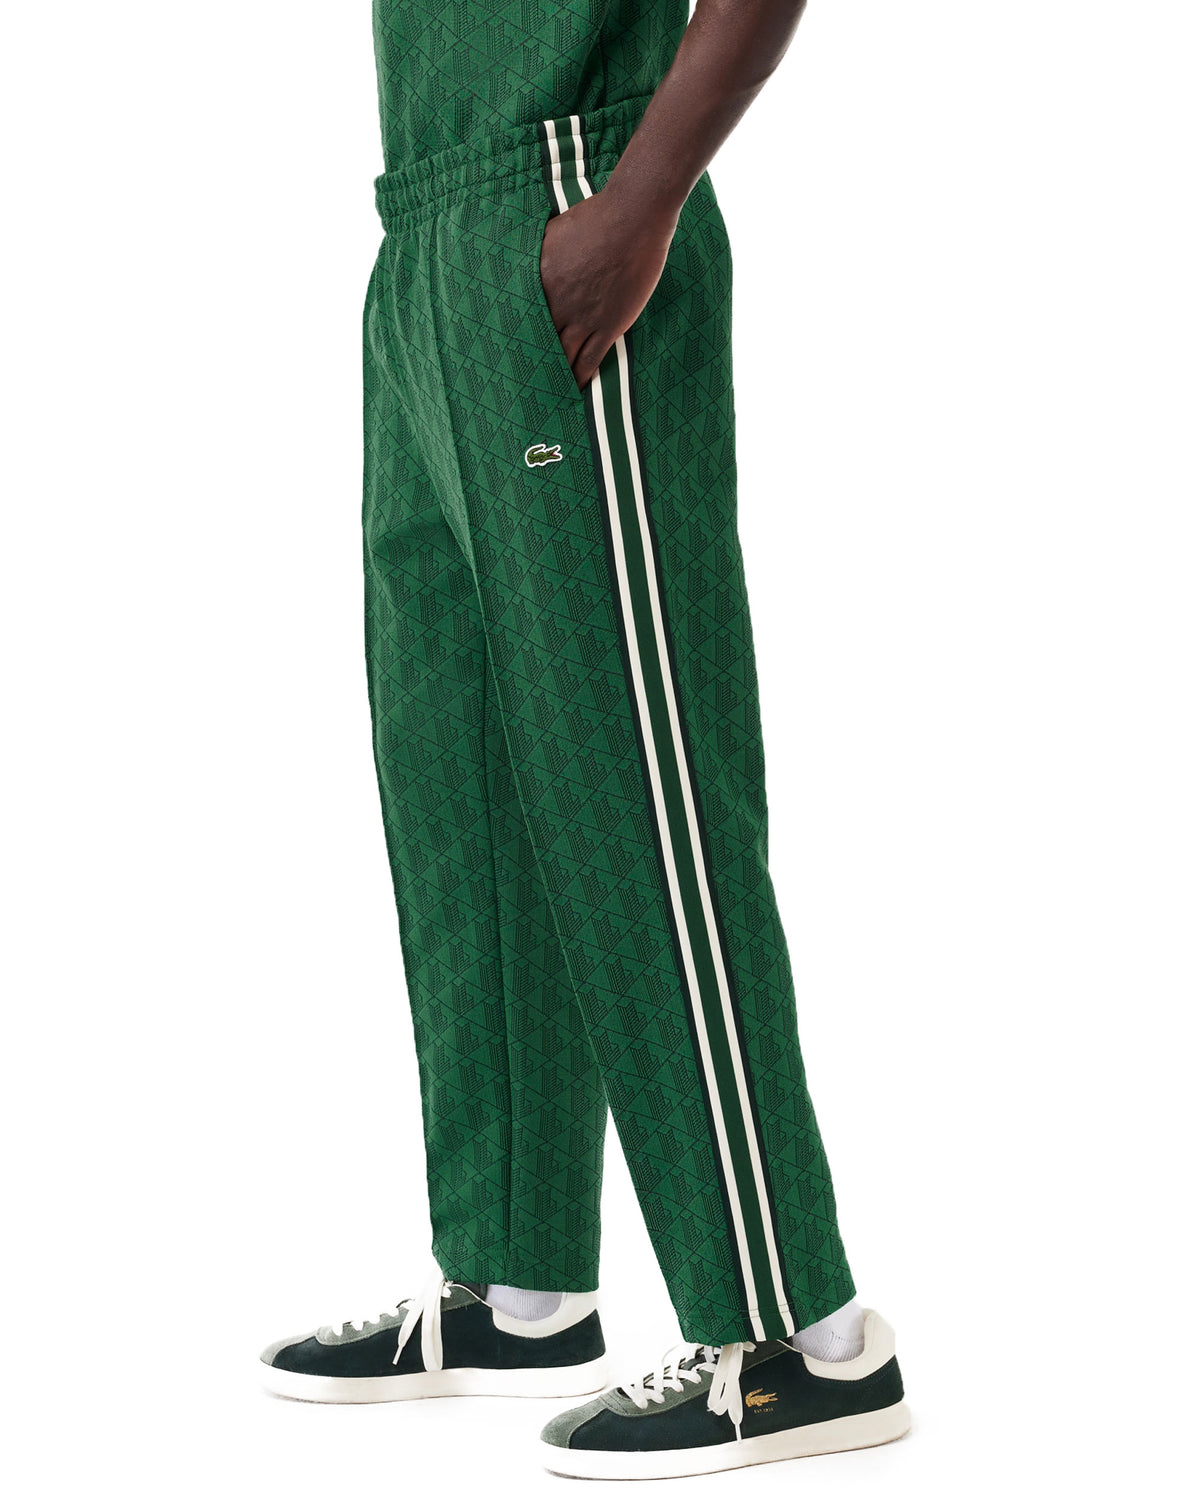 Pantalone Uomo Lacoste Jaquard Verde